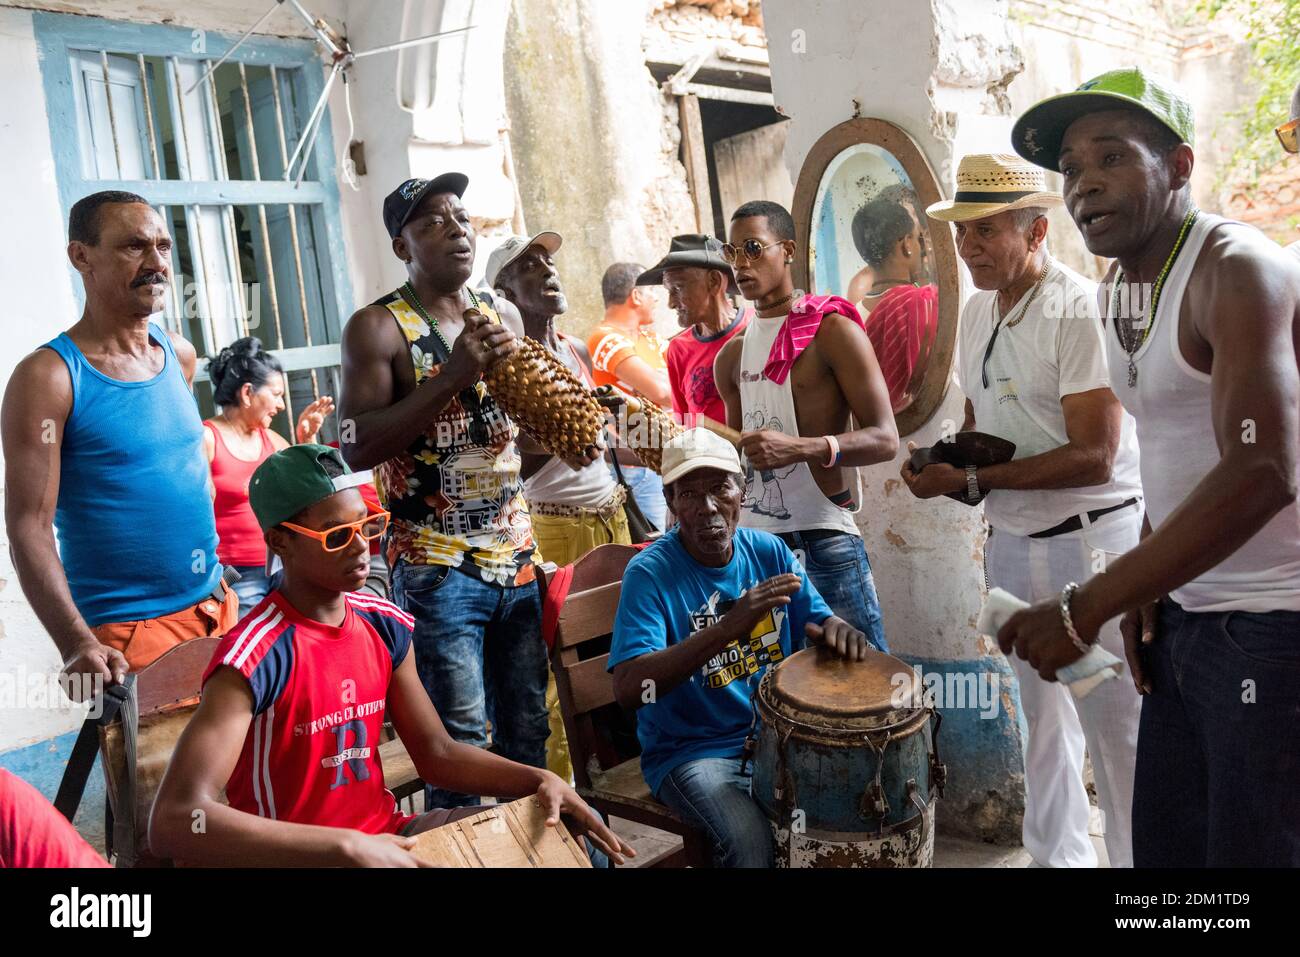 Santeria religion followers drumming and making music in Trinidad, Cuba Stock Photo